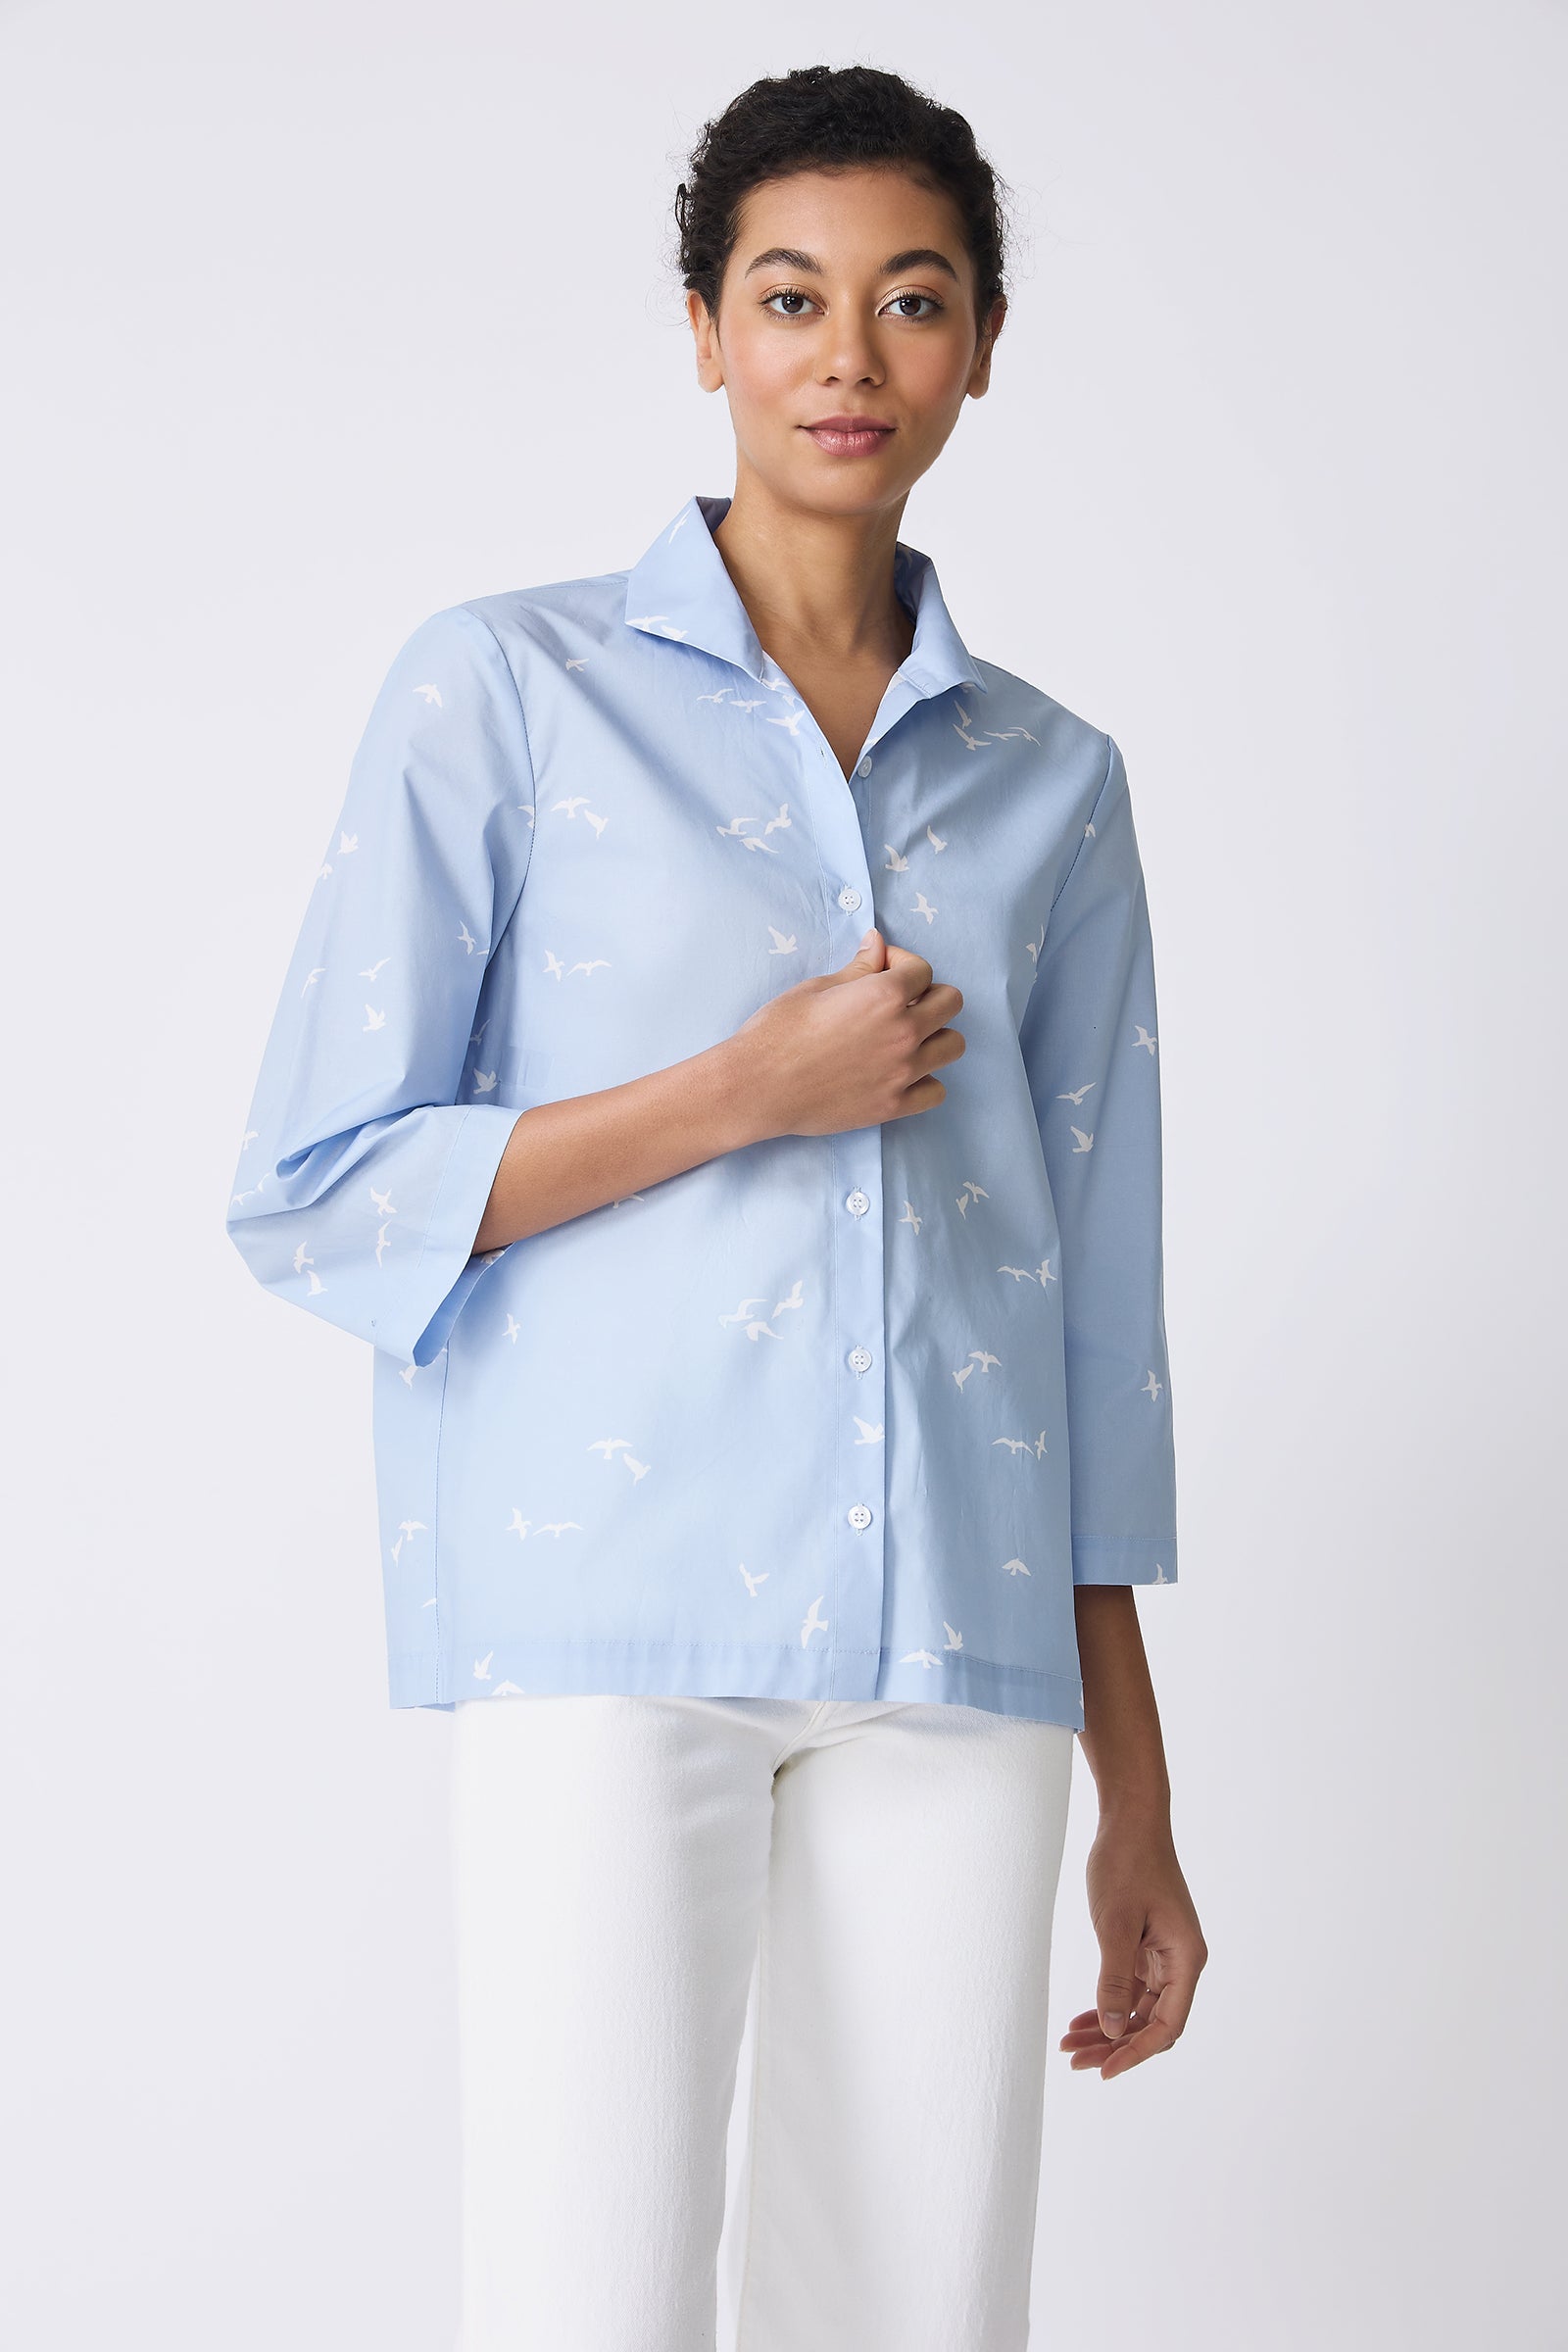 Kal Rieman 3/4 Sleeve Ginna Shirt in Oxford Blue Bird Print on model touching shirt front view